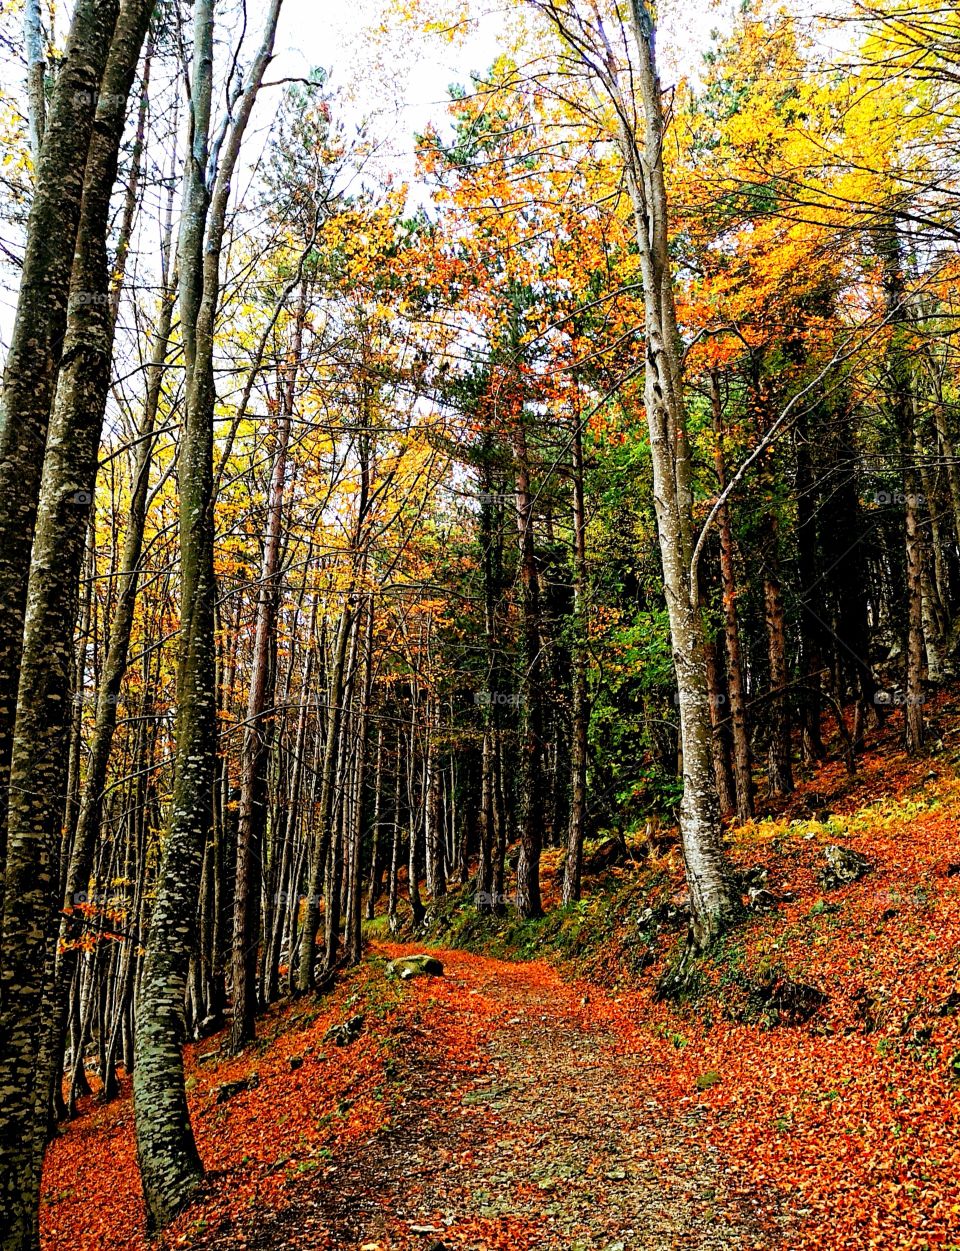 Woods colors in autumn